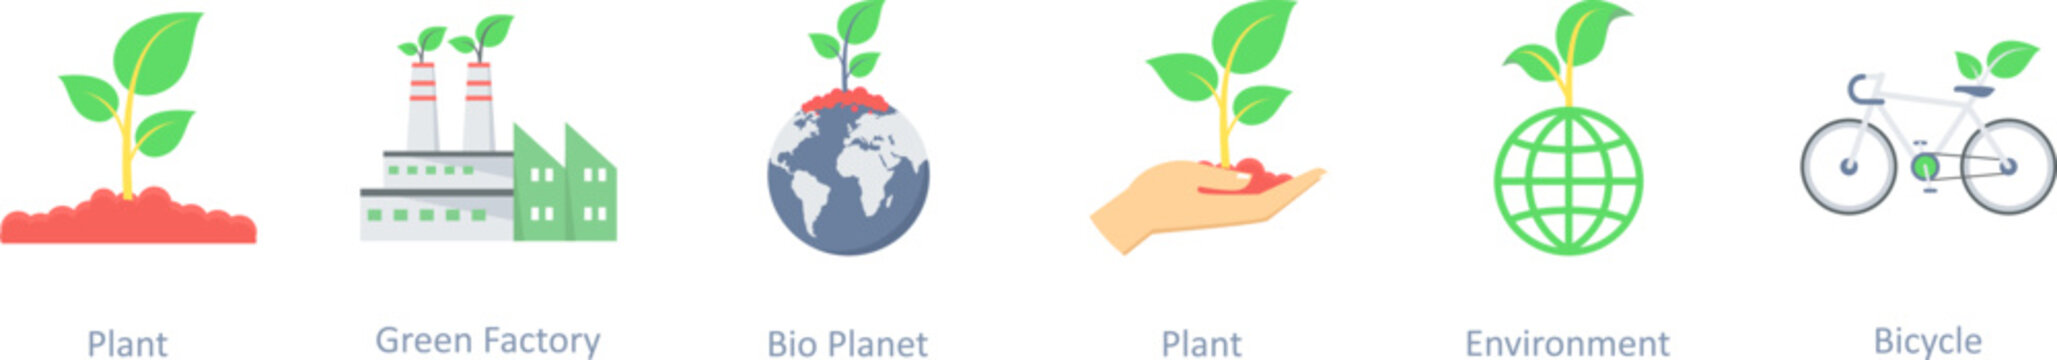 plant, green factory, bio planet